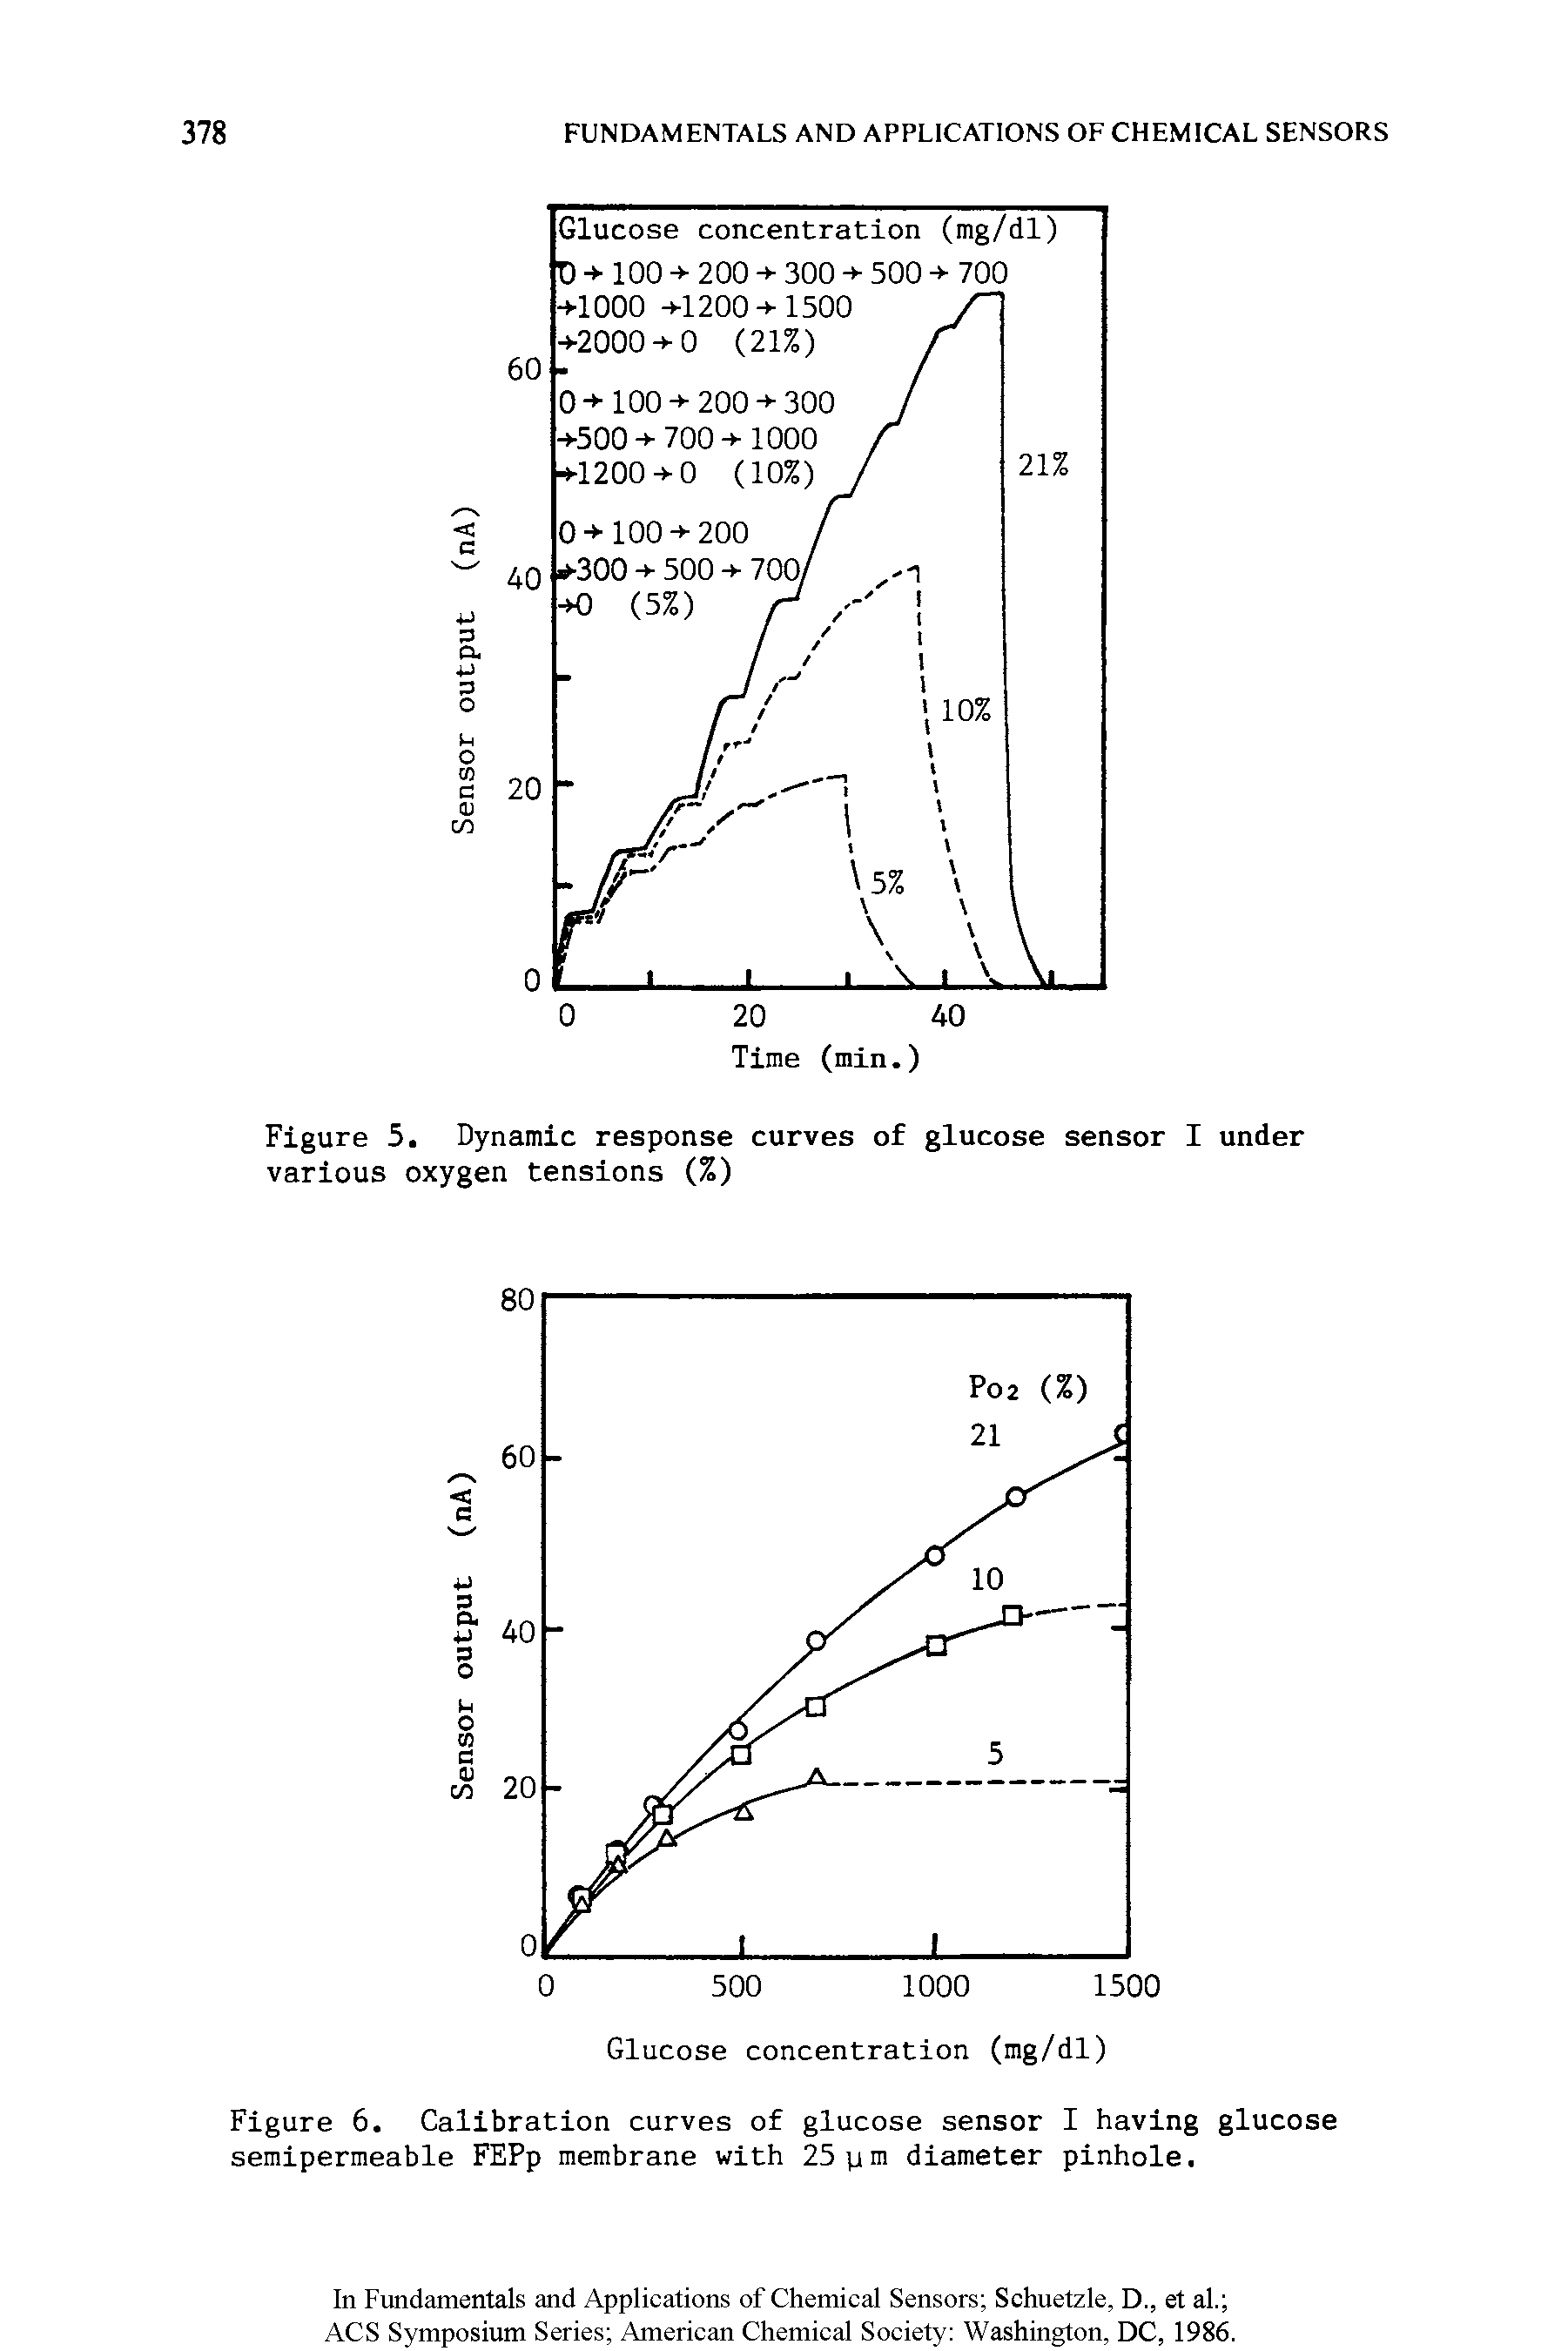 Figure 6. Calibration curves of glucose sensor I having glucose semipermeable FEPp membrane with 25 pm diameter pinhole.